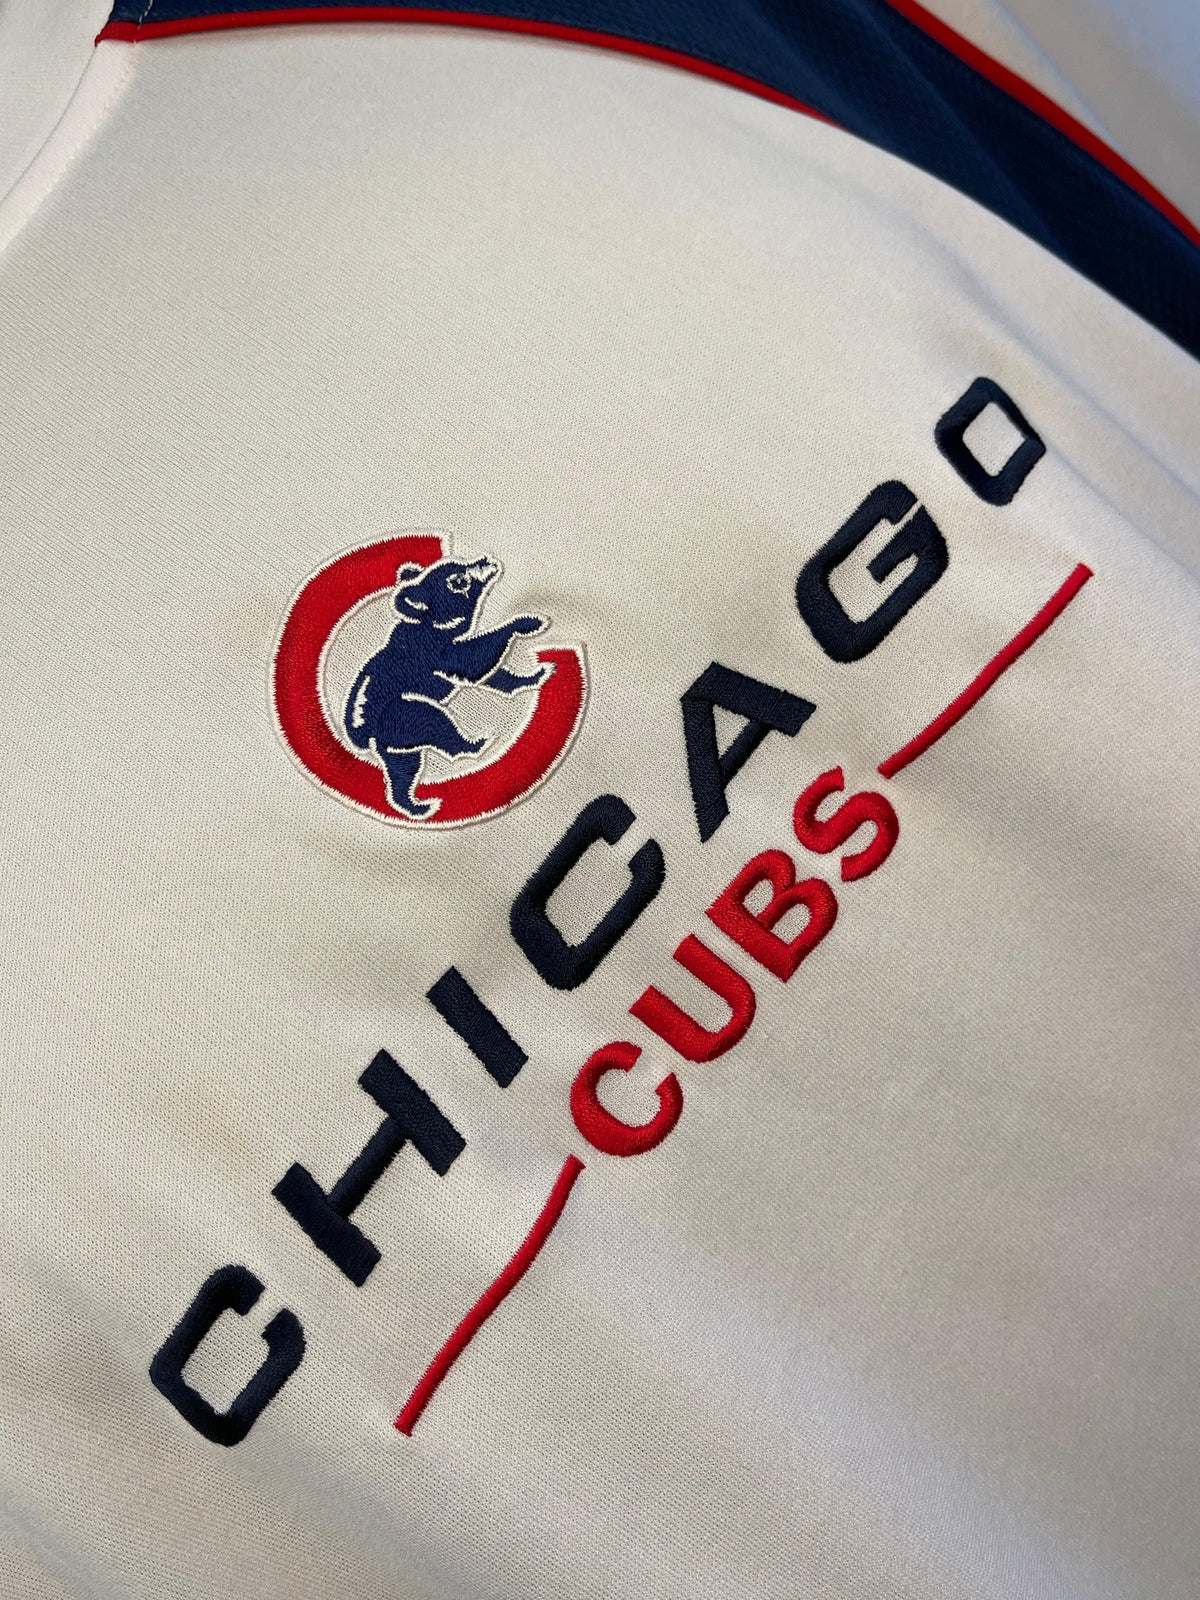 MLB Chicago Cubs White Sports T-Shirt Men's Large